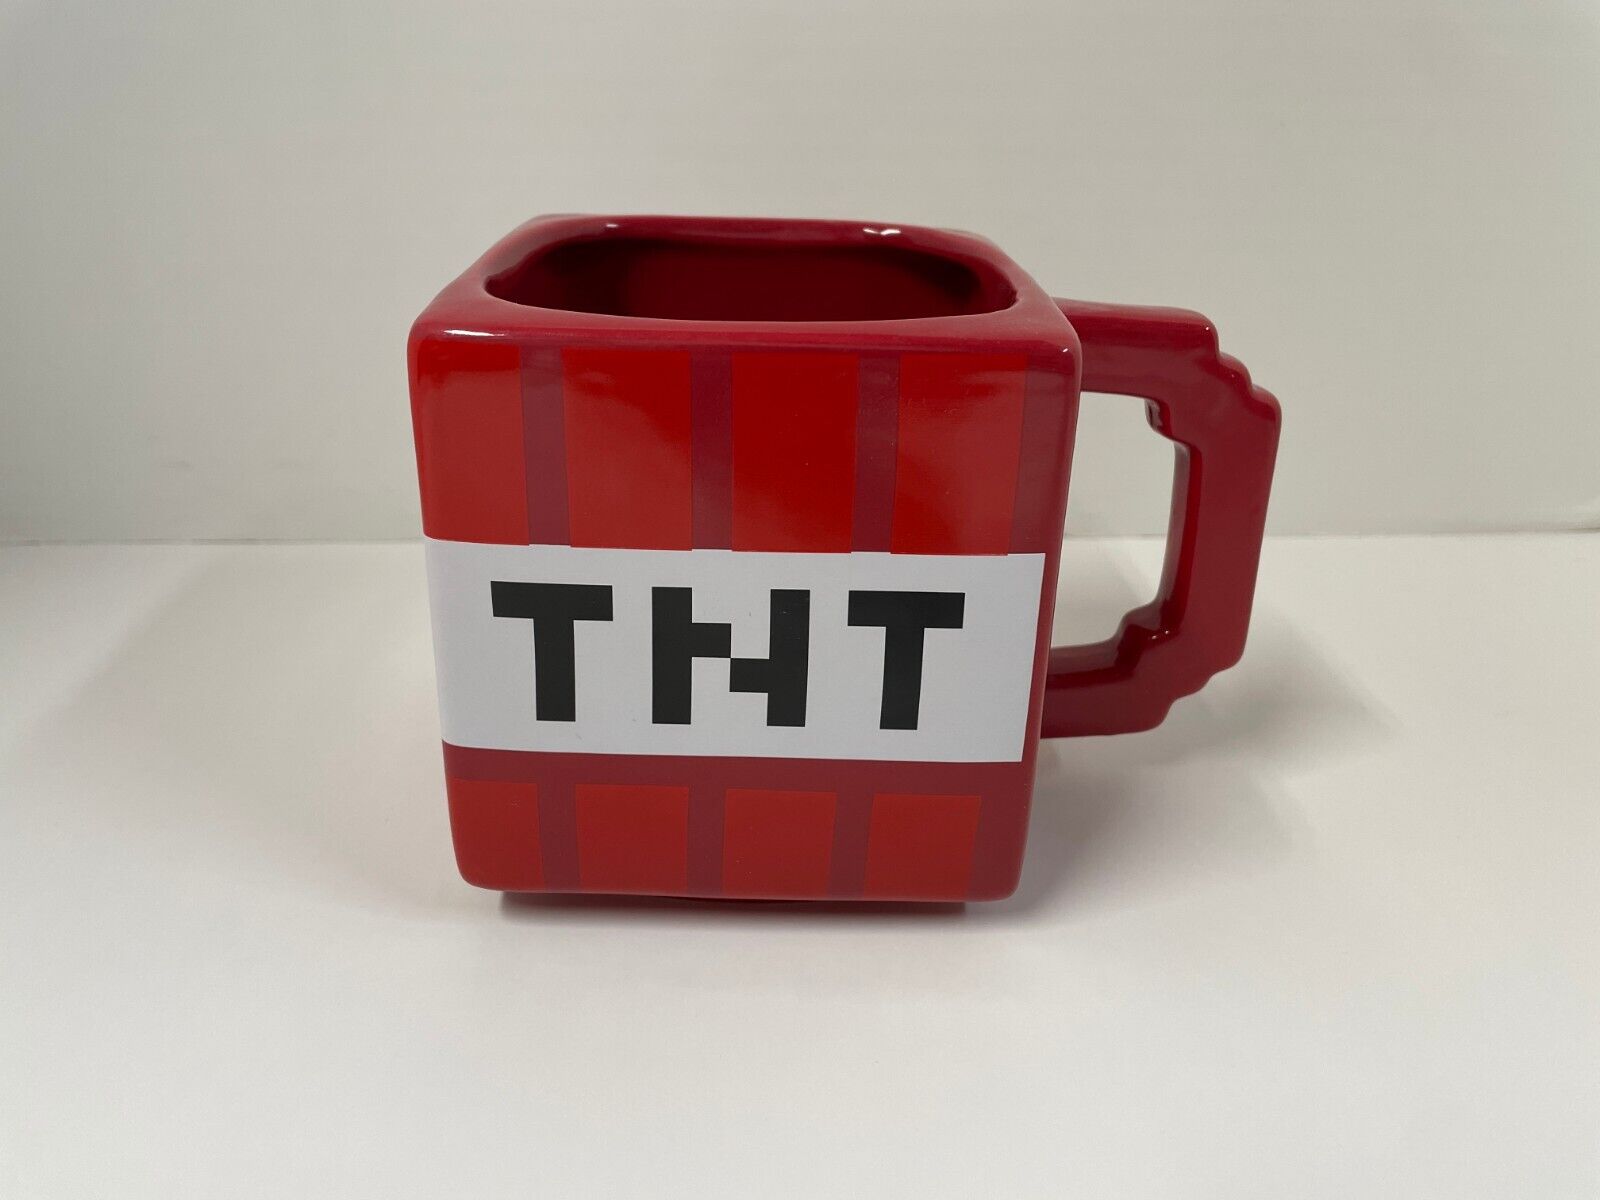 Minecraft TNT Red Ceramic 21 oz. Mug Cup - NEW